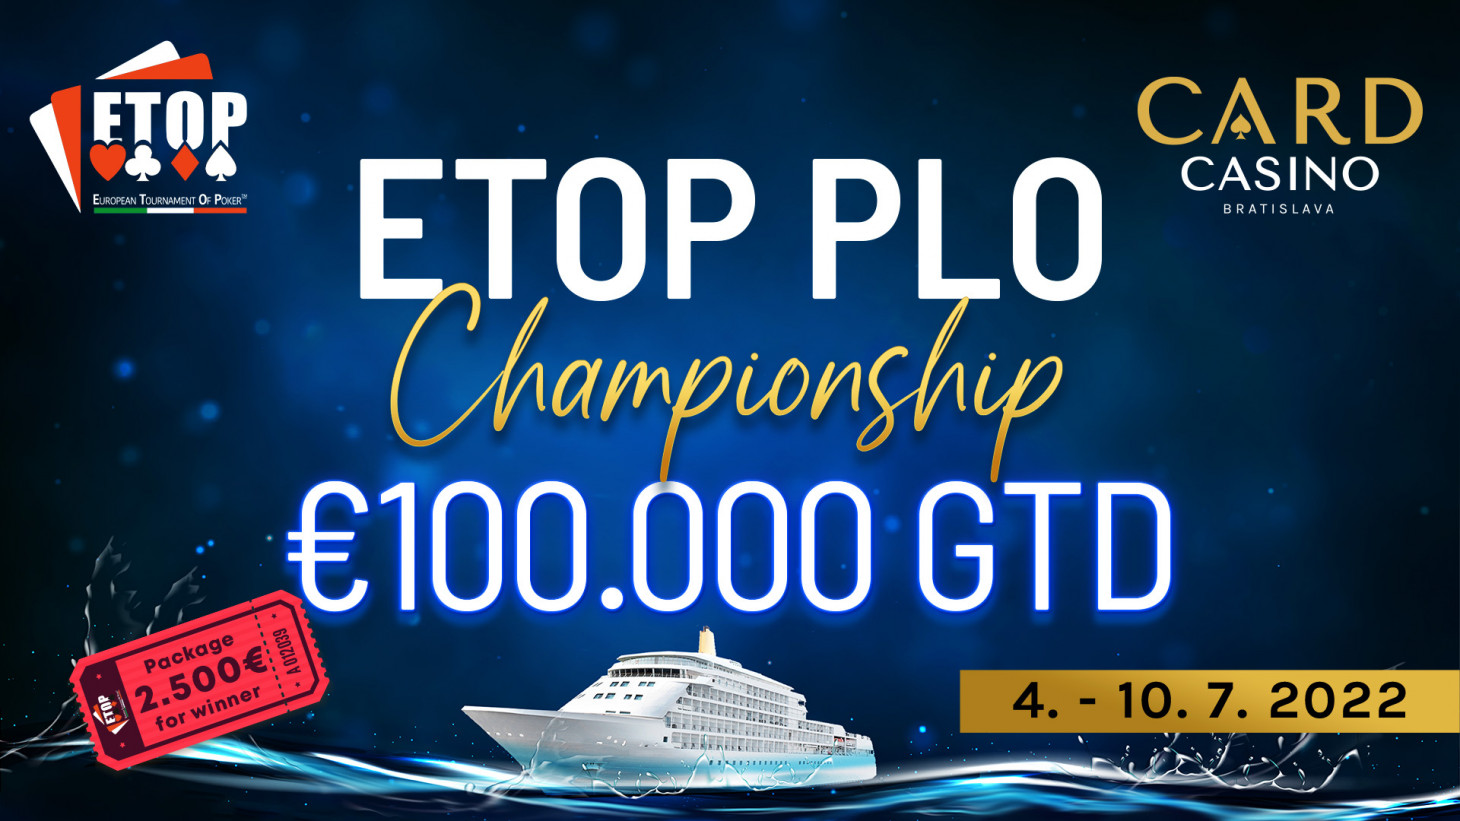 ETOP PLO Championship €100.000 